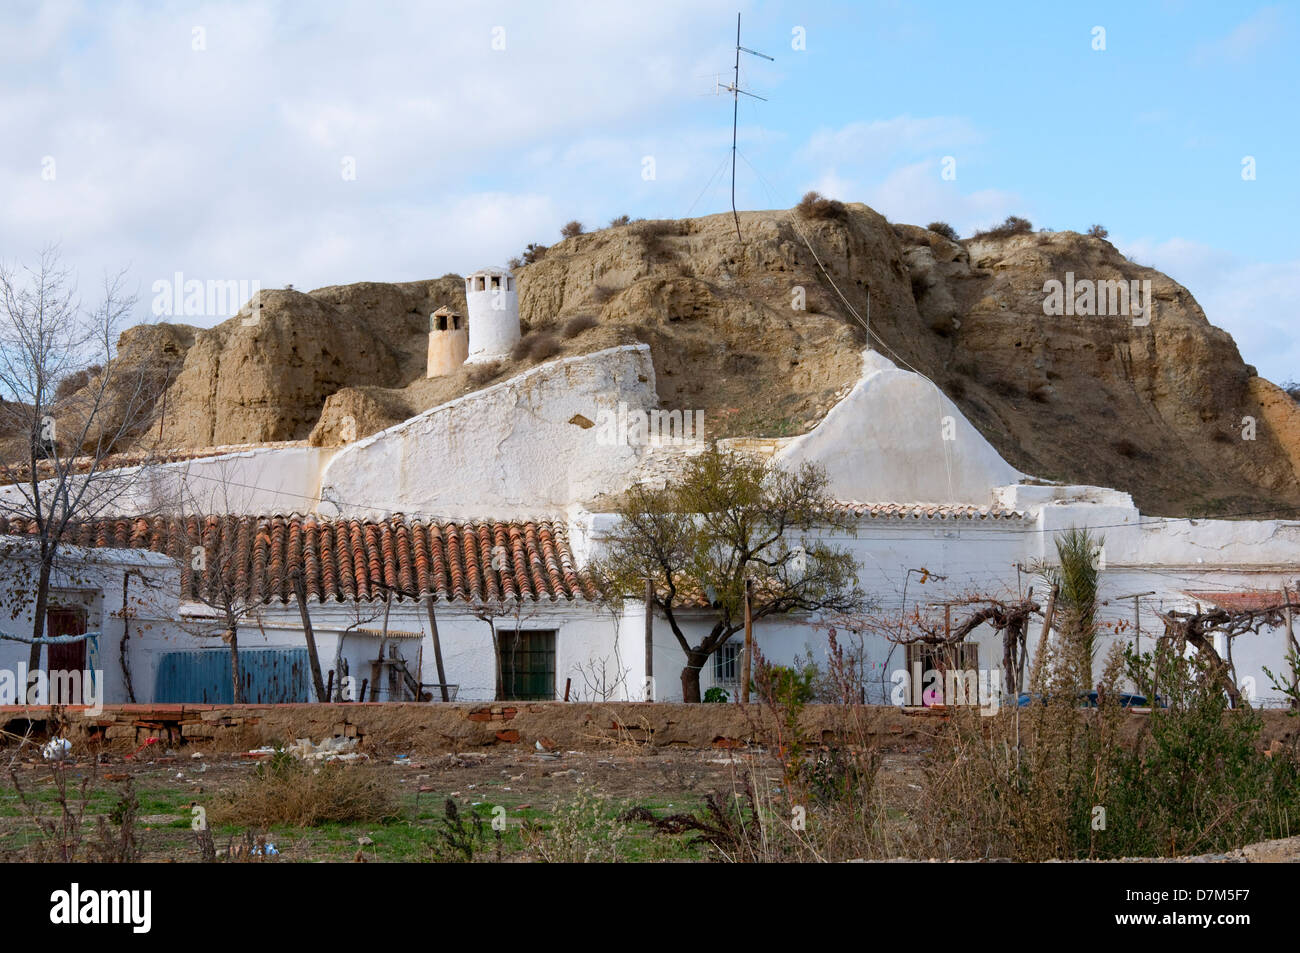 Troglodyte cave dwellings in the city of Guadix, Granada, Spain. Stock Photo